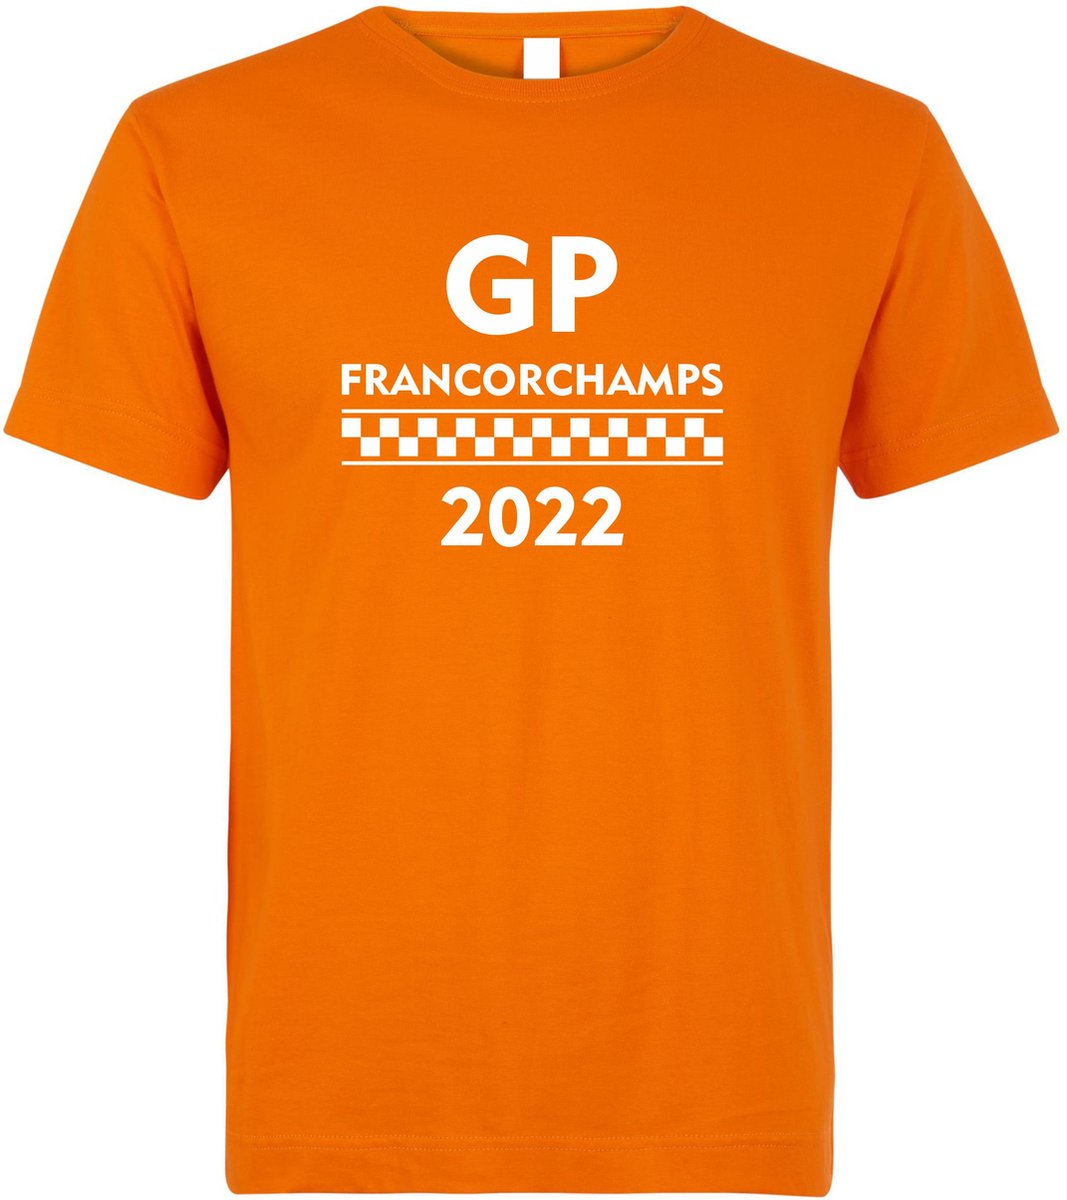 T-shirt GP Francorchamps 2022 | Max Verstappen / Red Bull Racing / Formule 1 fan | Grand Prix Circuit Spa-Francorchamps | kleding shirt | Oranje | maat M